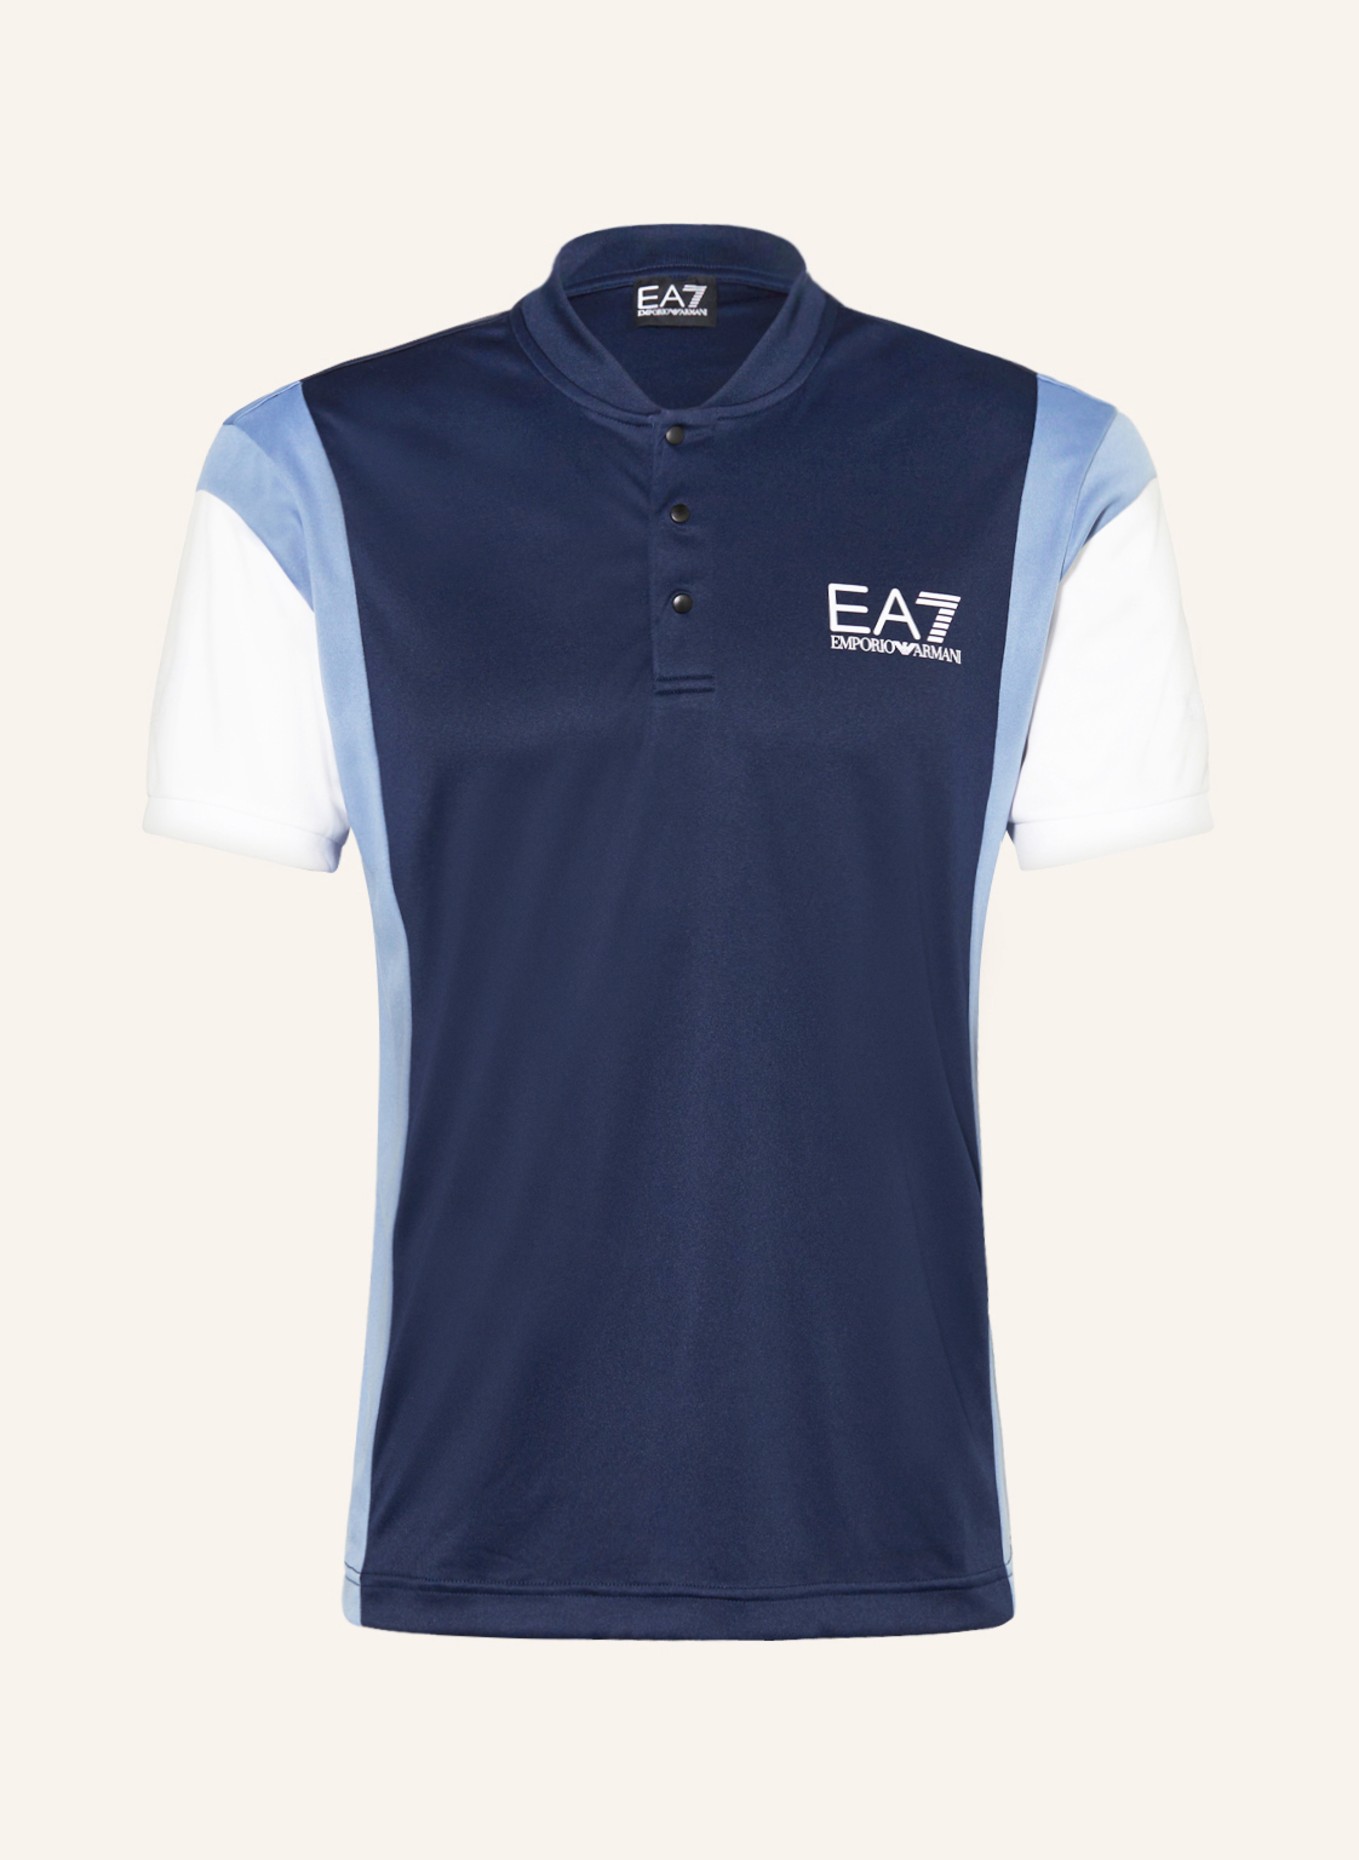 EA7 EMPORIO ARMANI Funktions-Poloshirt PJPCZ, Farbe: DUNKELBLAU/ HELLBLAU/ WEISS (Bild 1)